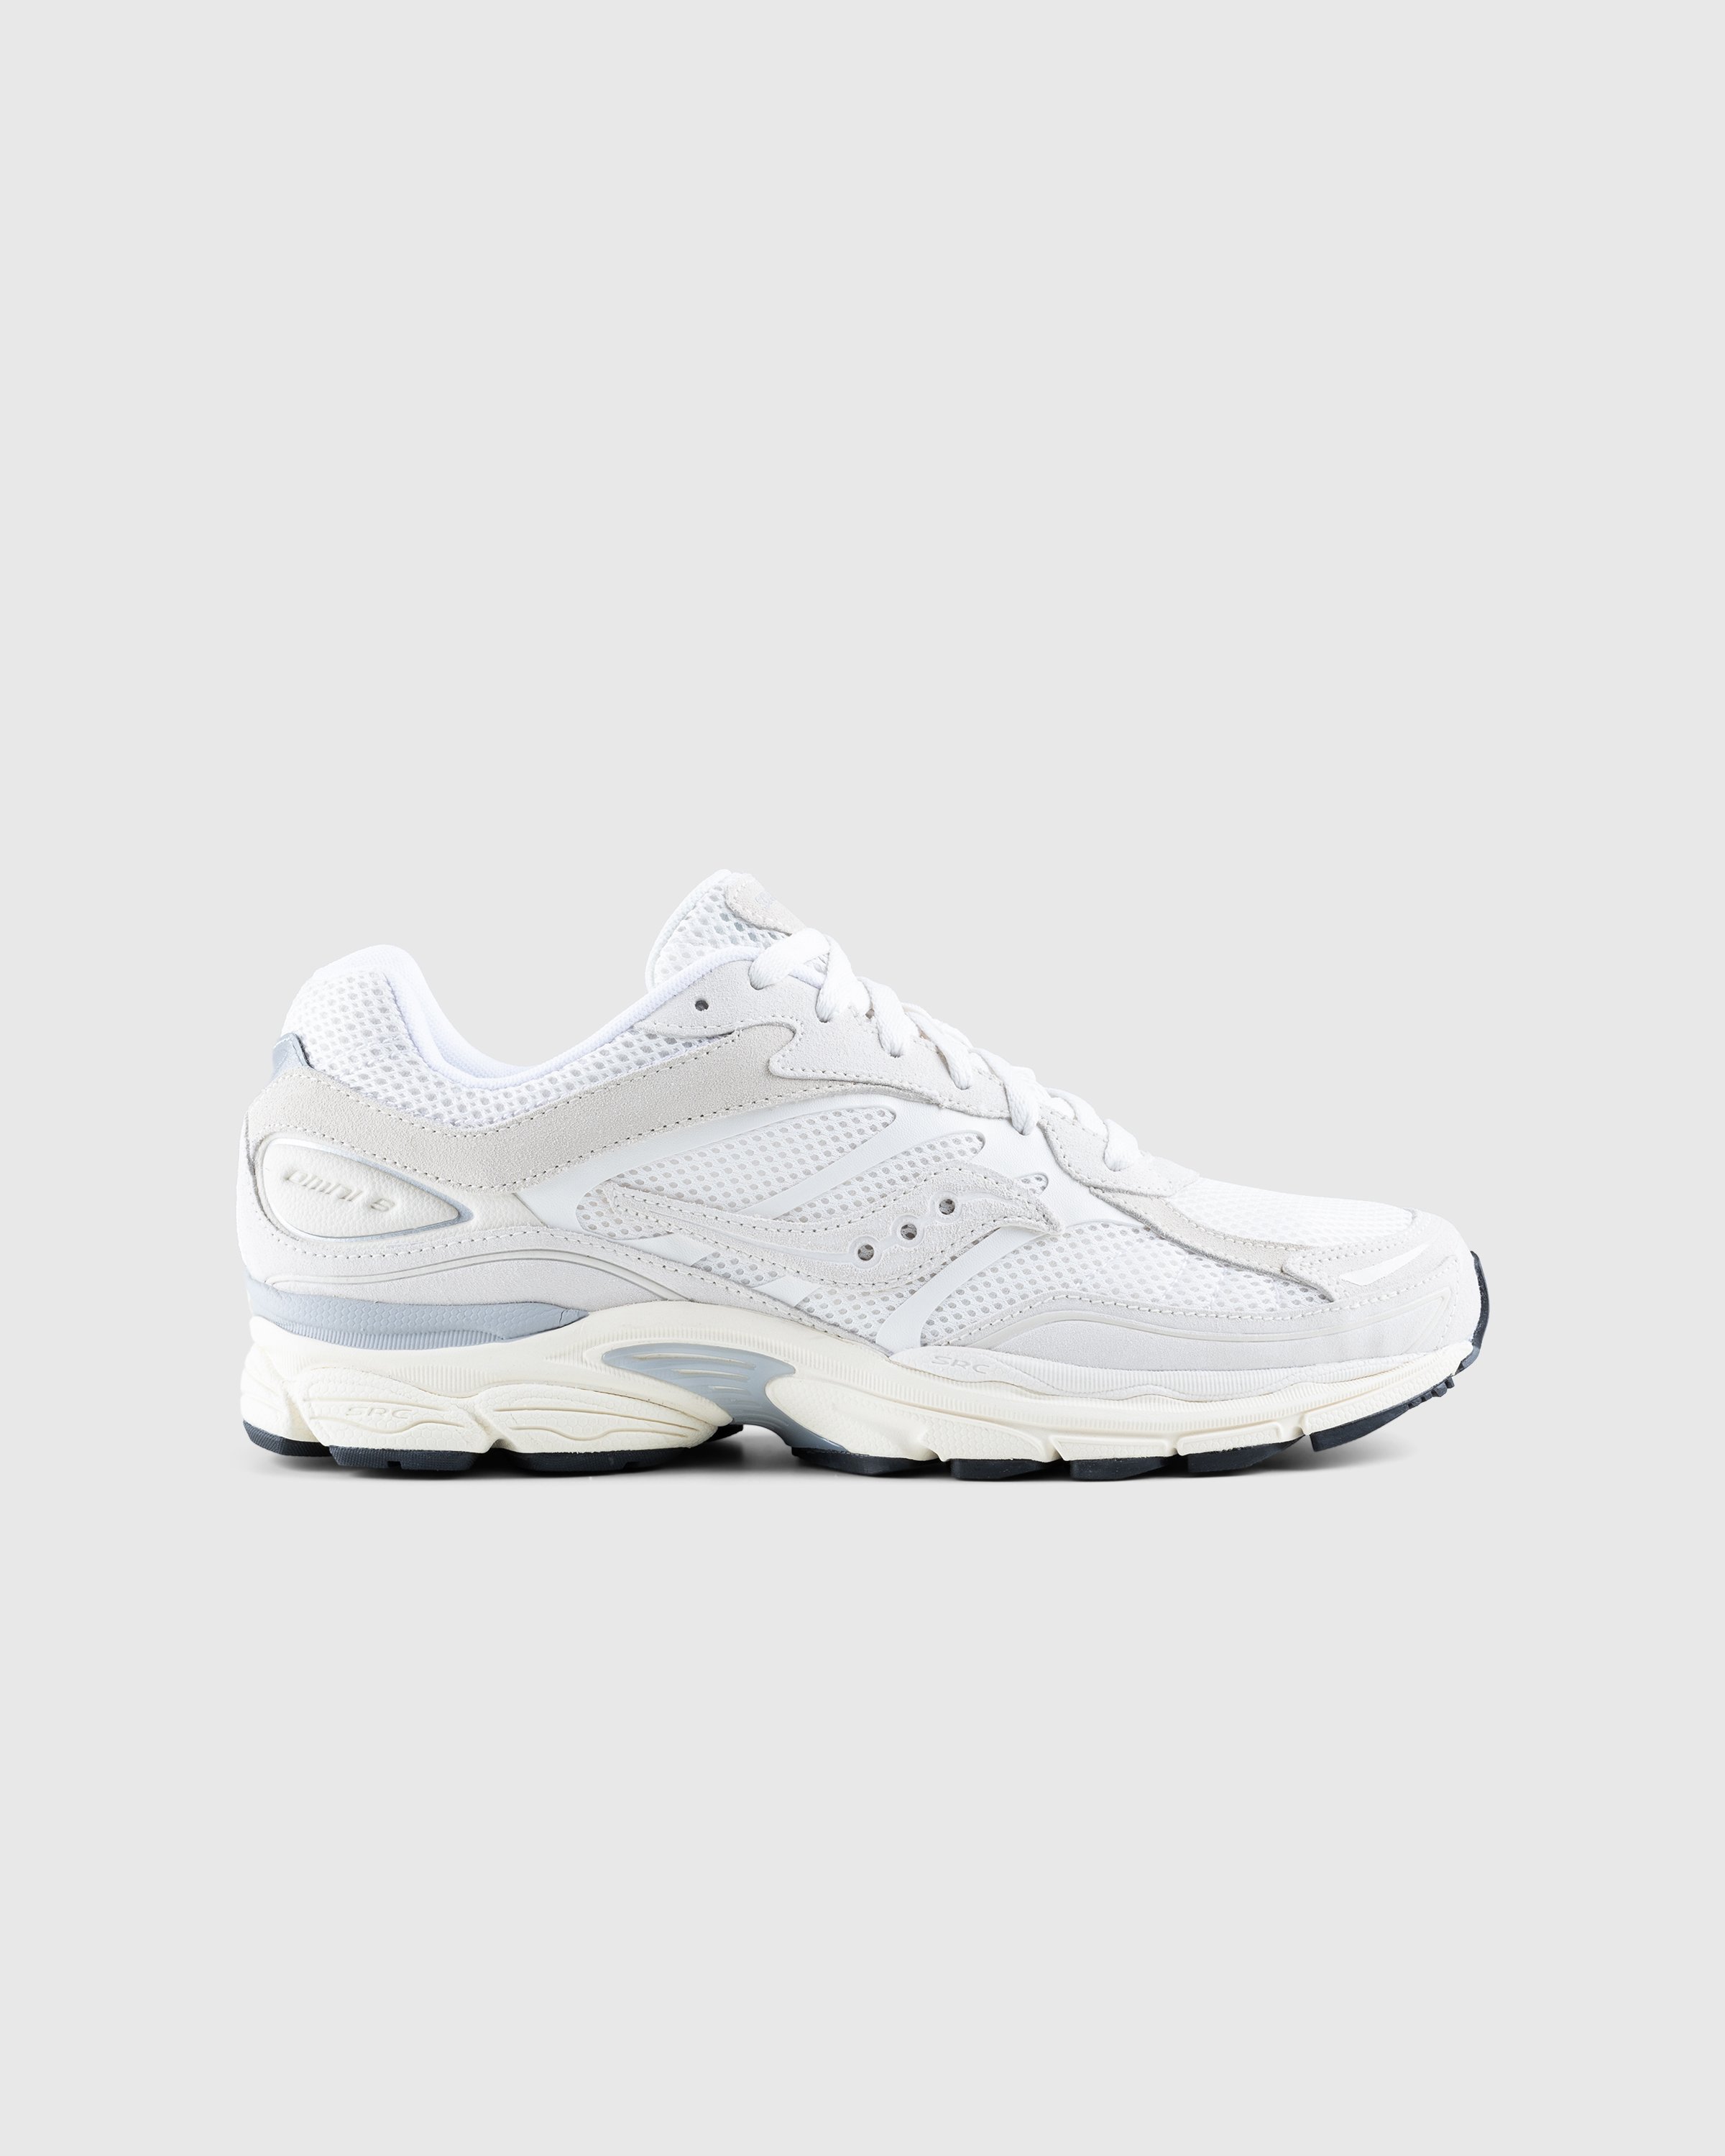 Saucony - ProGrid Omni 9 White/Off-White - Footwear - WHITE - Image 1